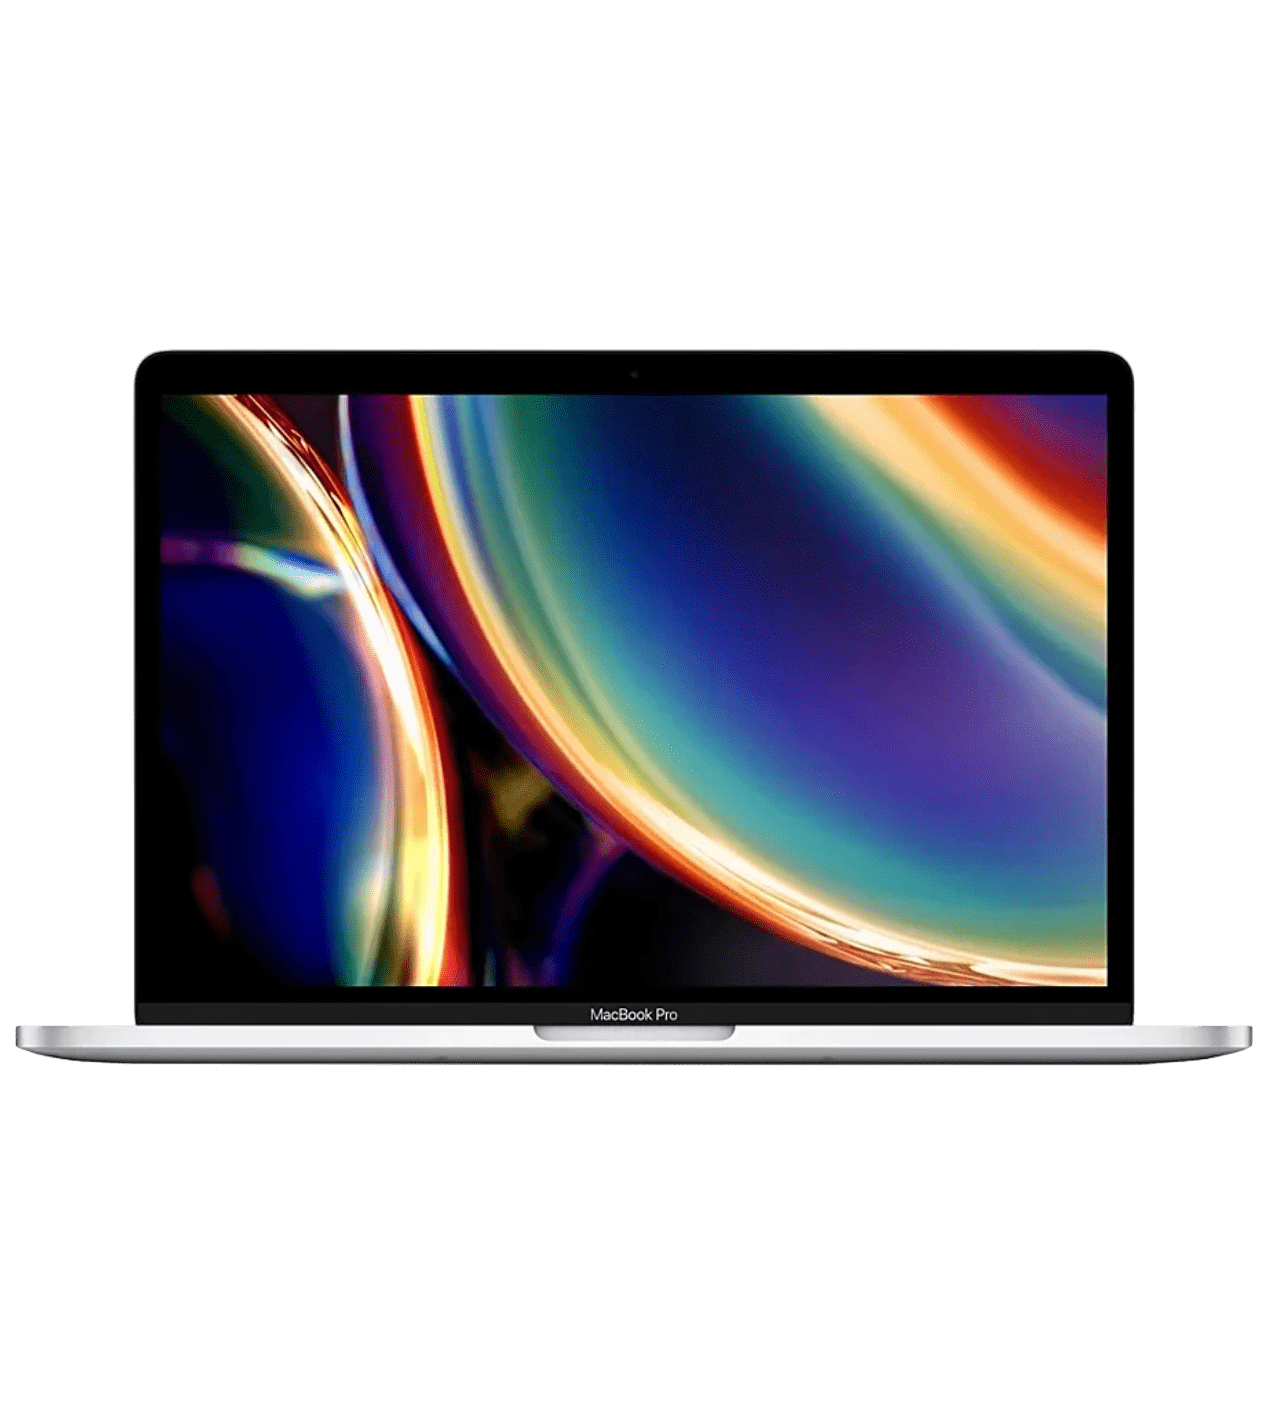 П/Г Ноутбук Apple Macbook Pro 13 i5/8/128GB Silver Cycle 350